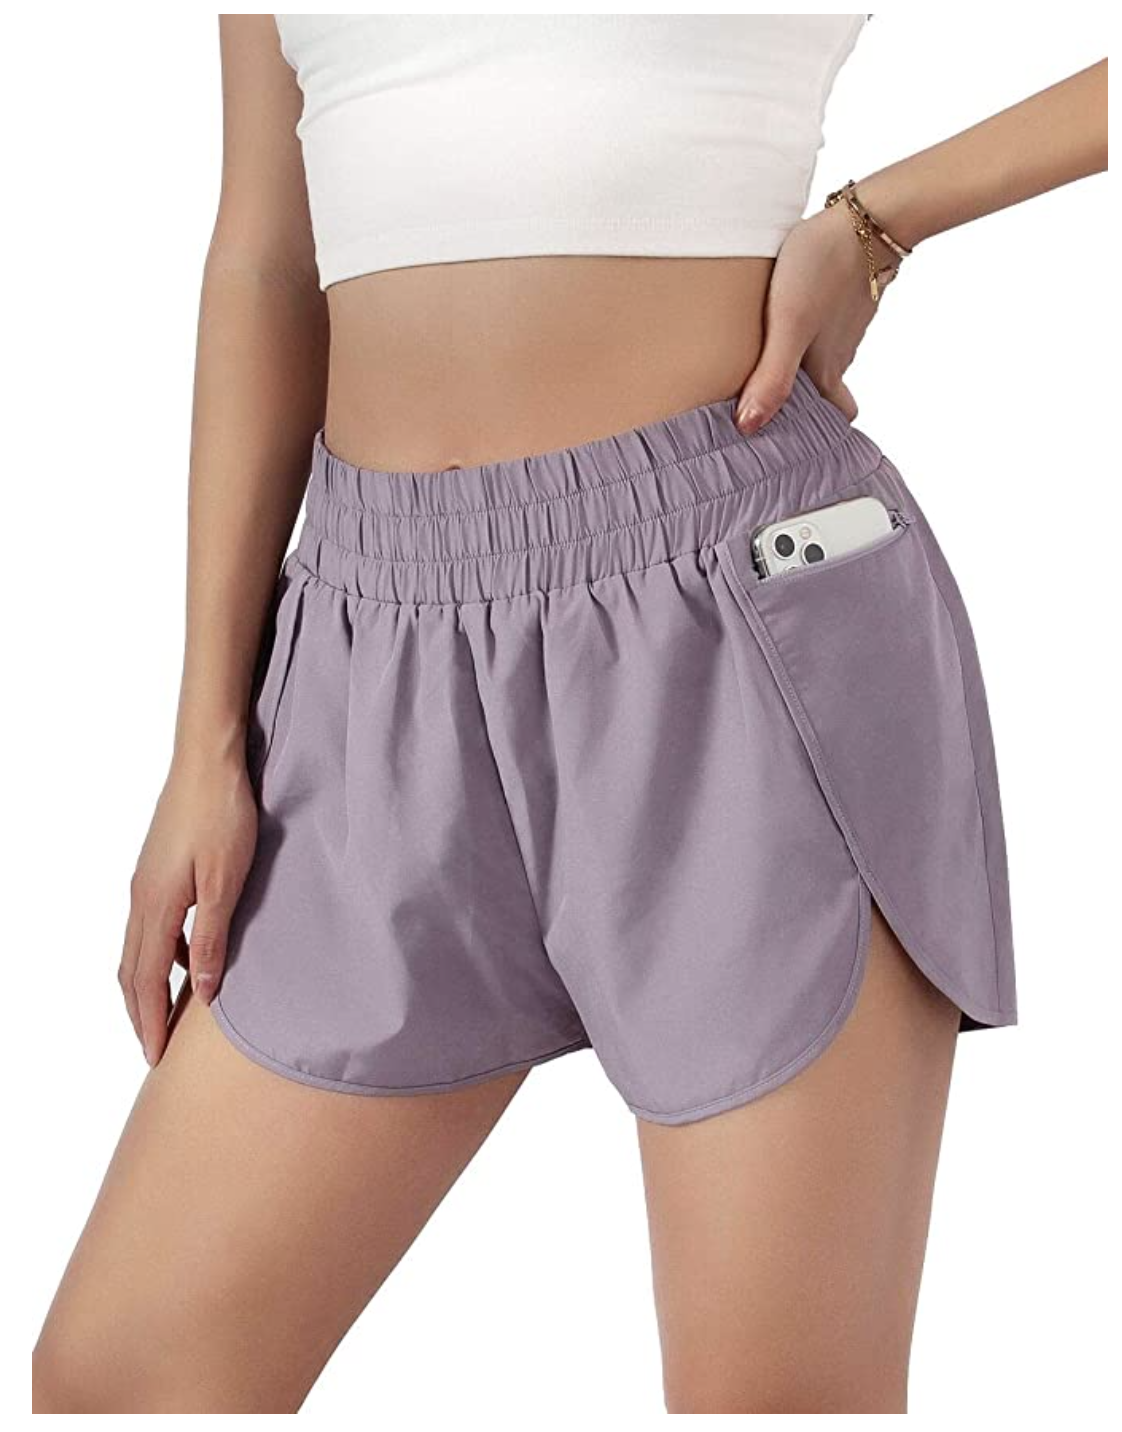 purple running shorts